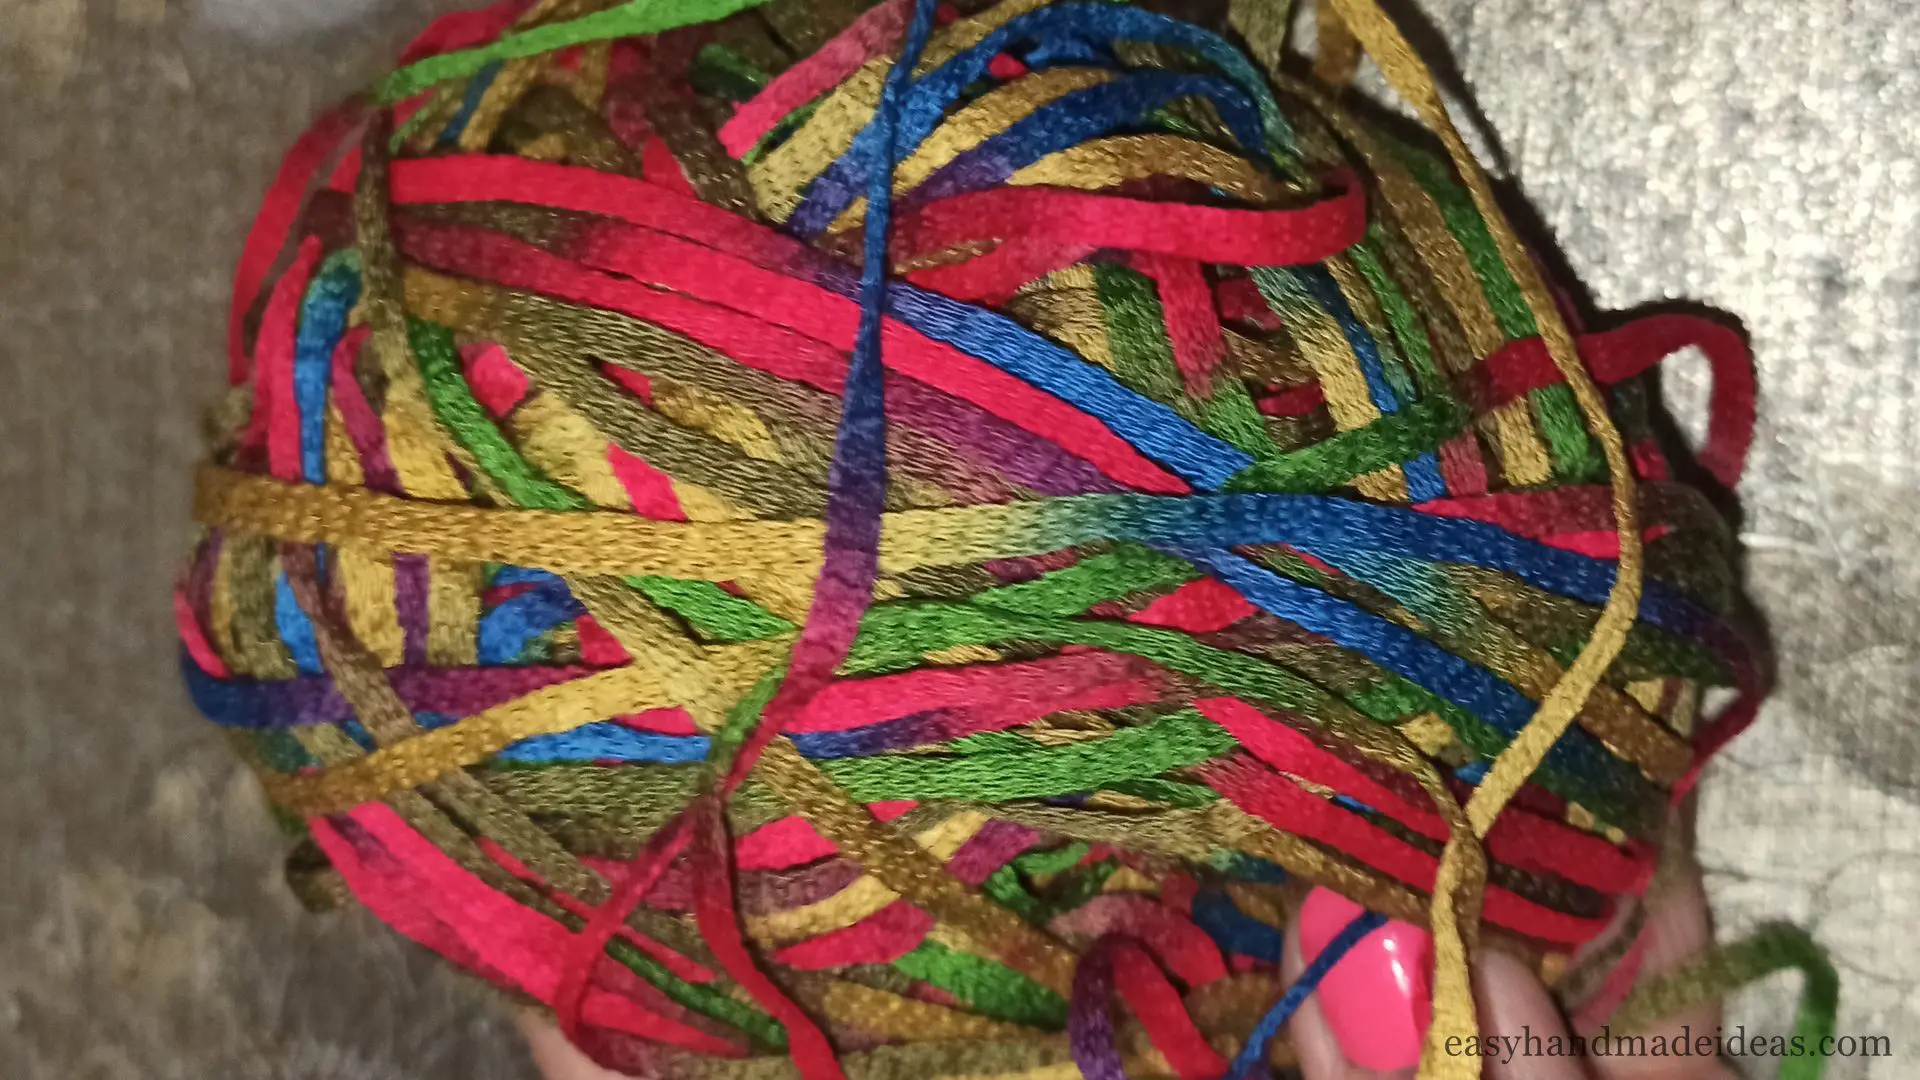 Take some colorful yarn